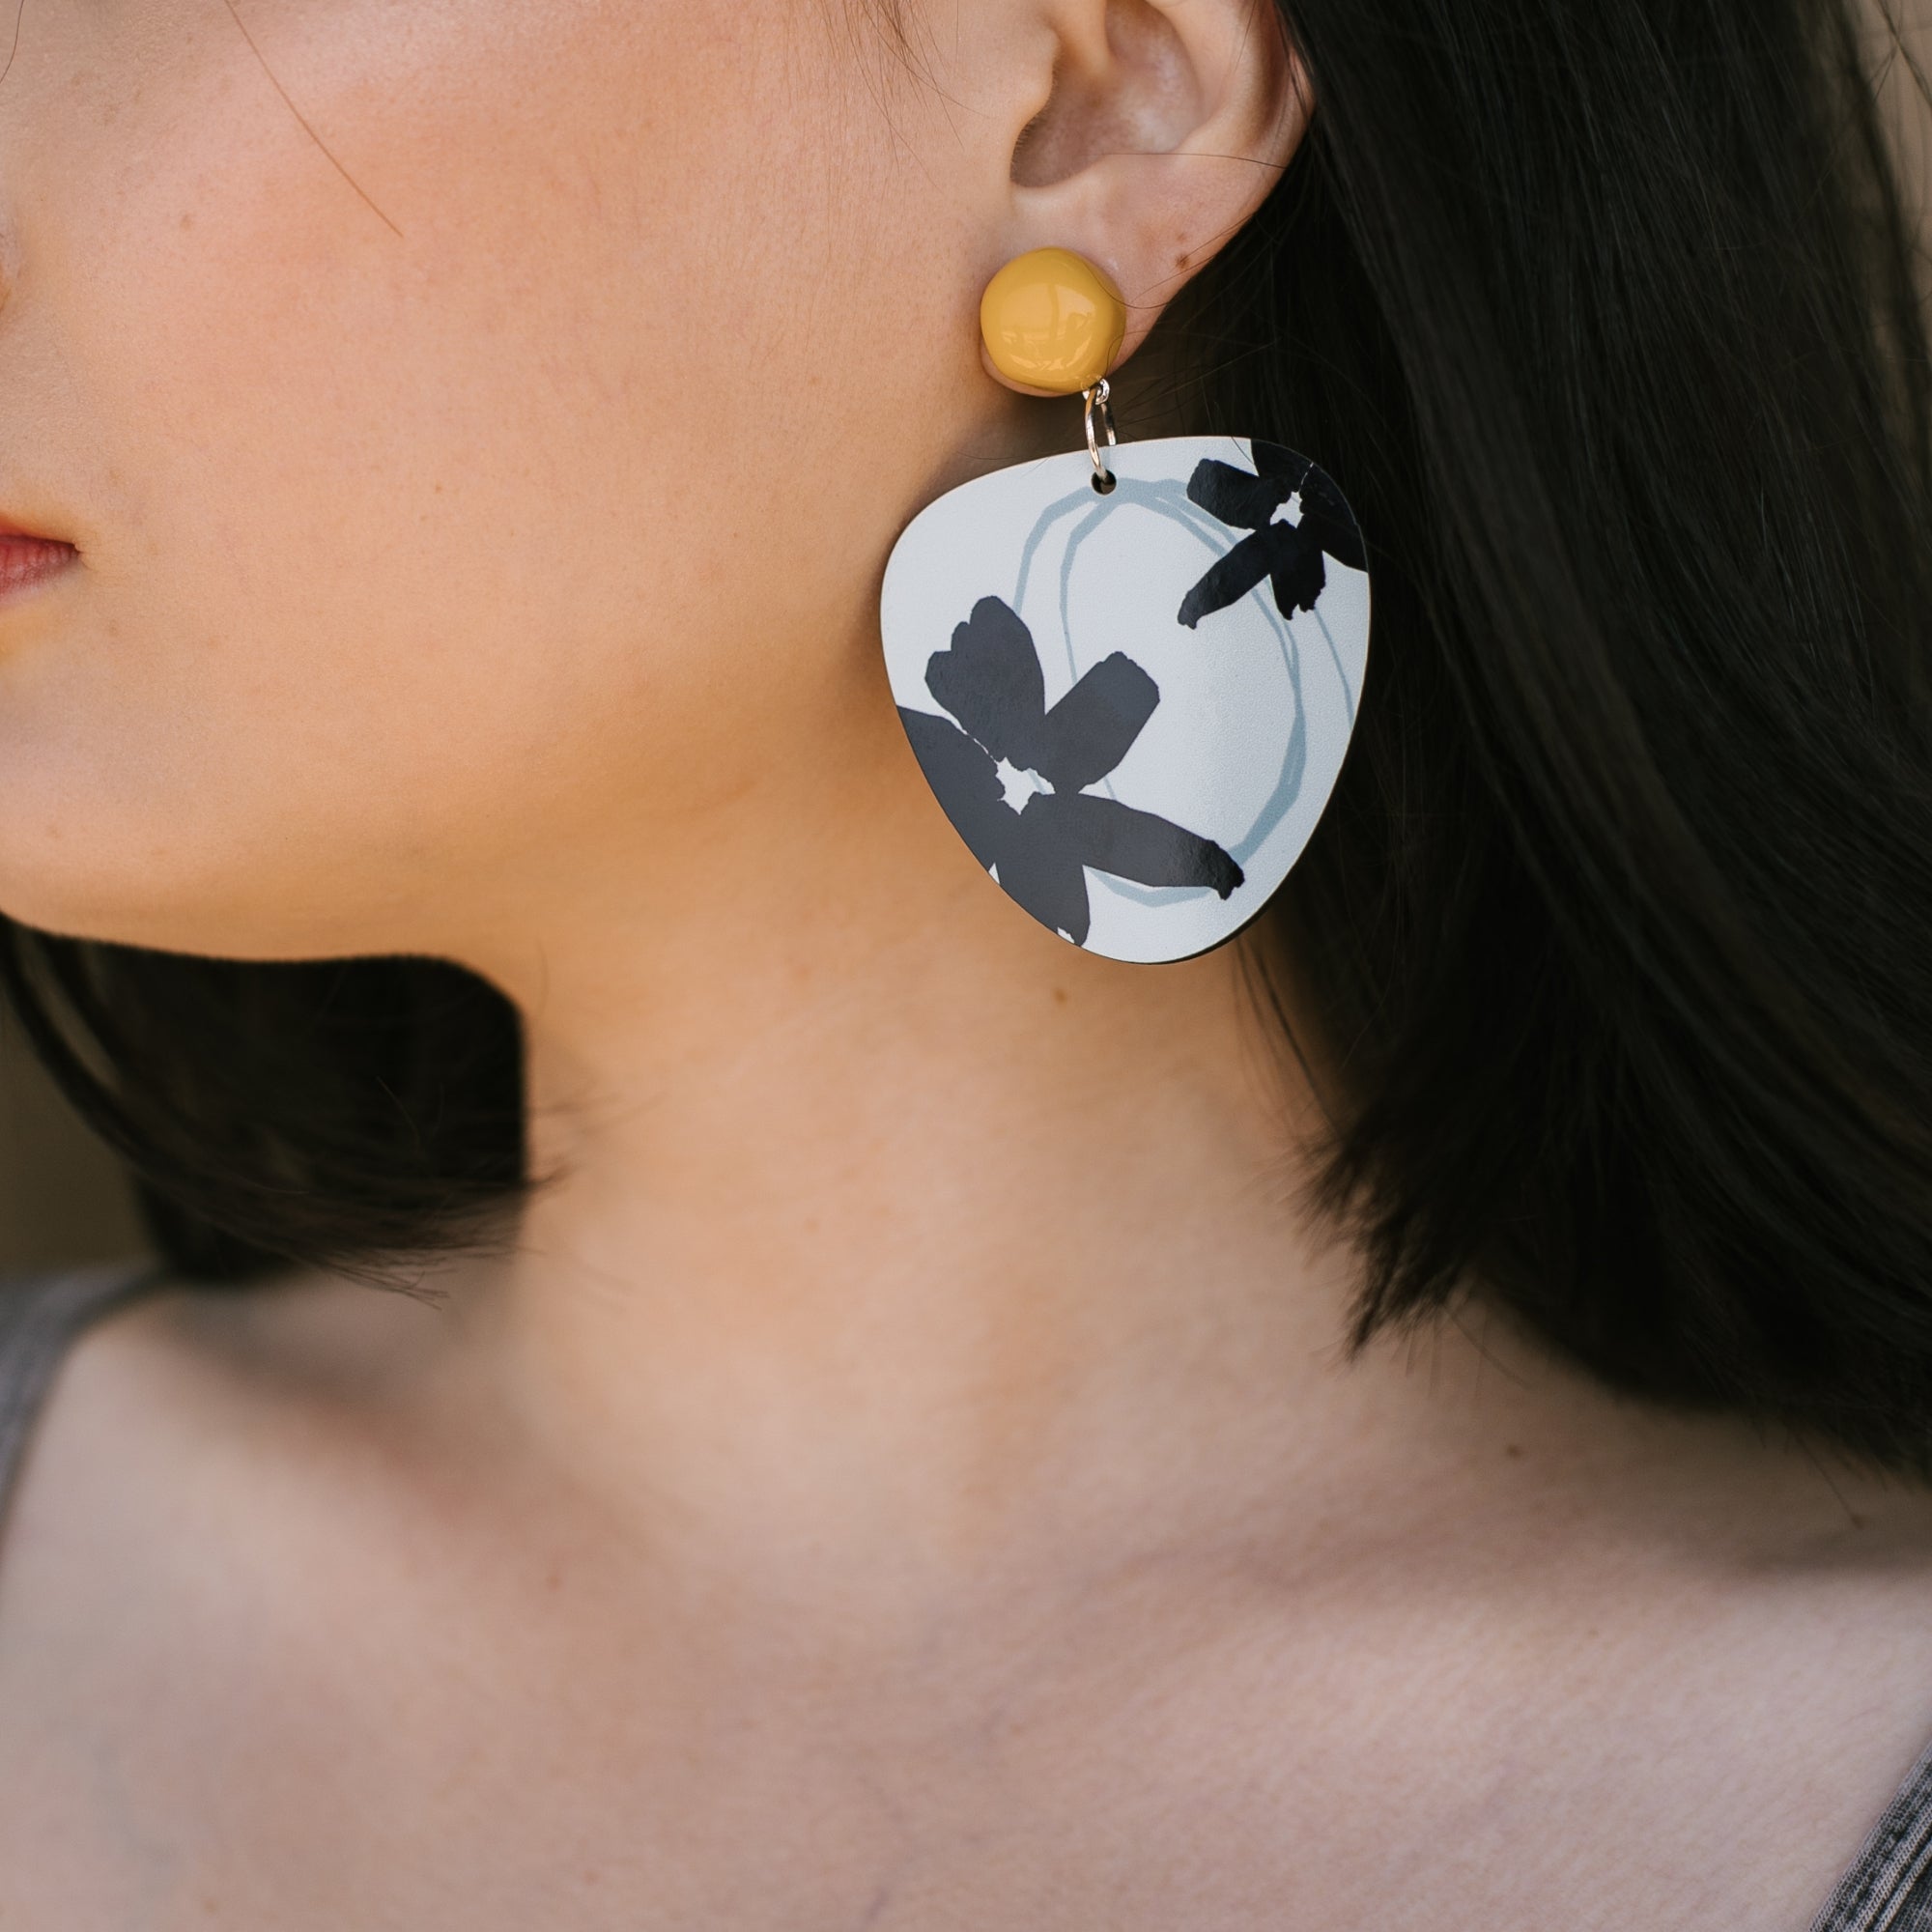 The Yellow Islands - original printed statement earrings